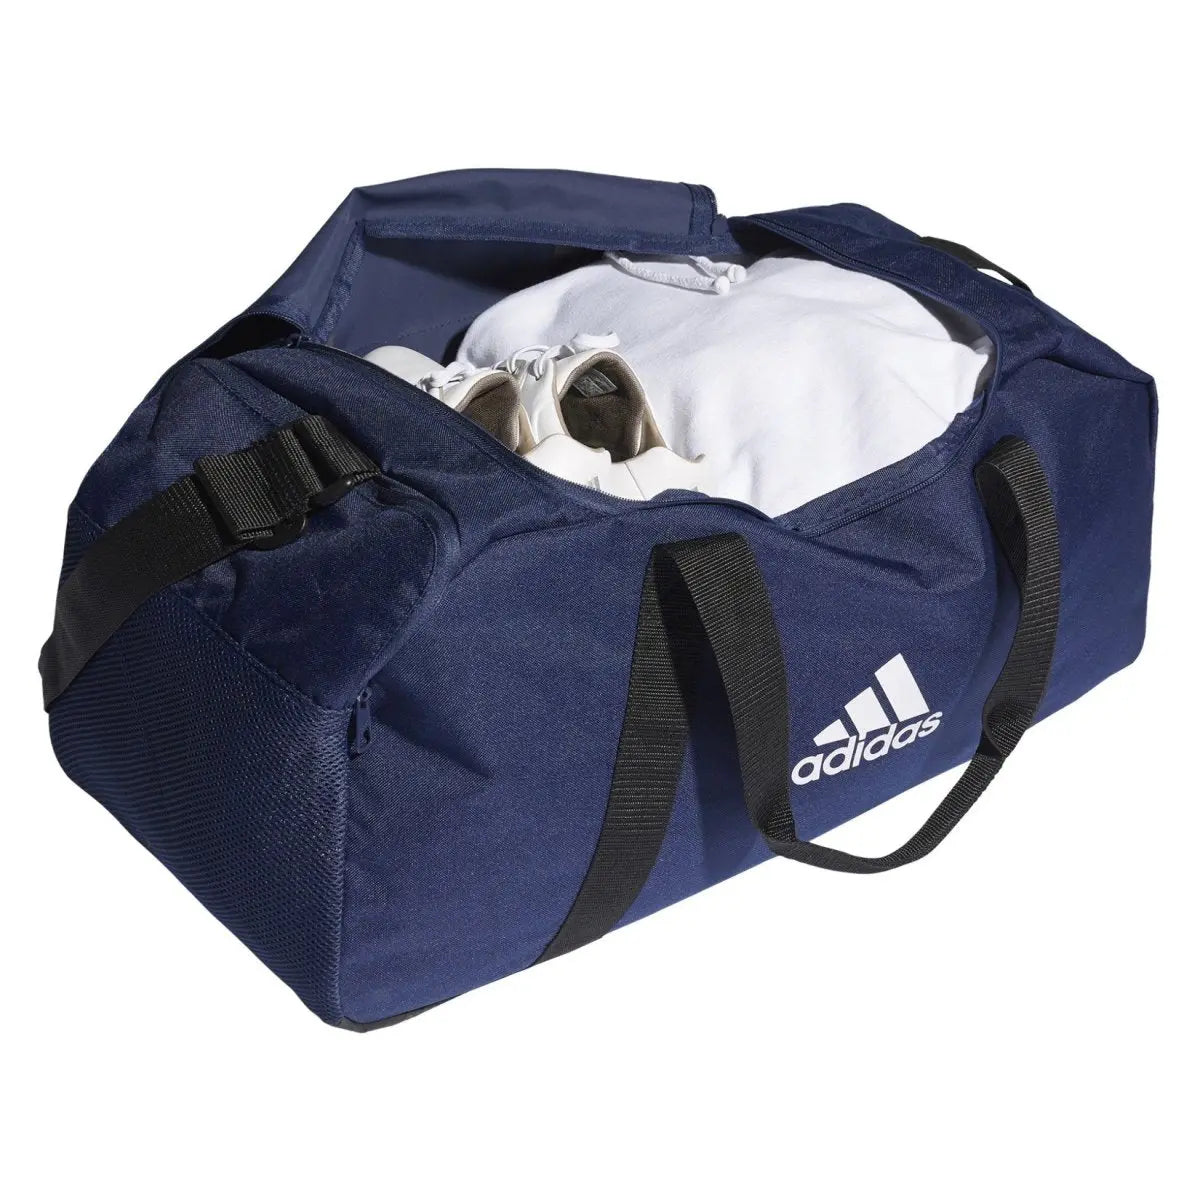 Adidas Duffle Bag Gray Black Medium Size Fresh Pak Gym Sports | eBay